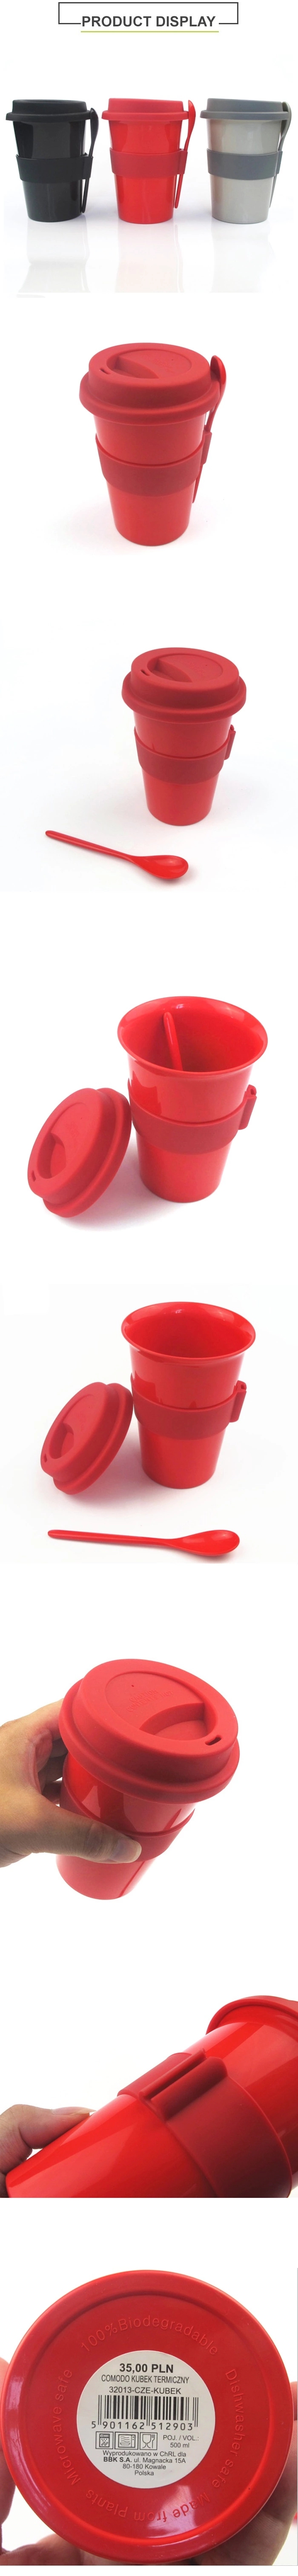 High quality outdoors portable biodegradable reusable pla bamboo fiber coffee mug with spoon